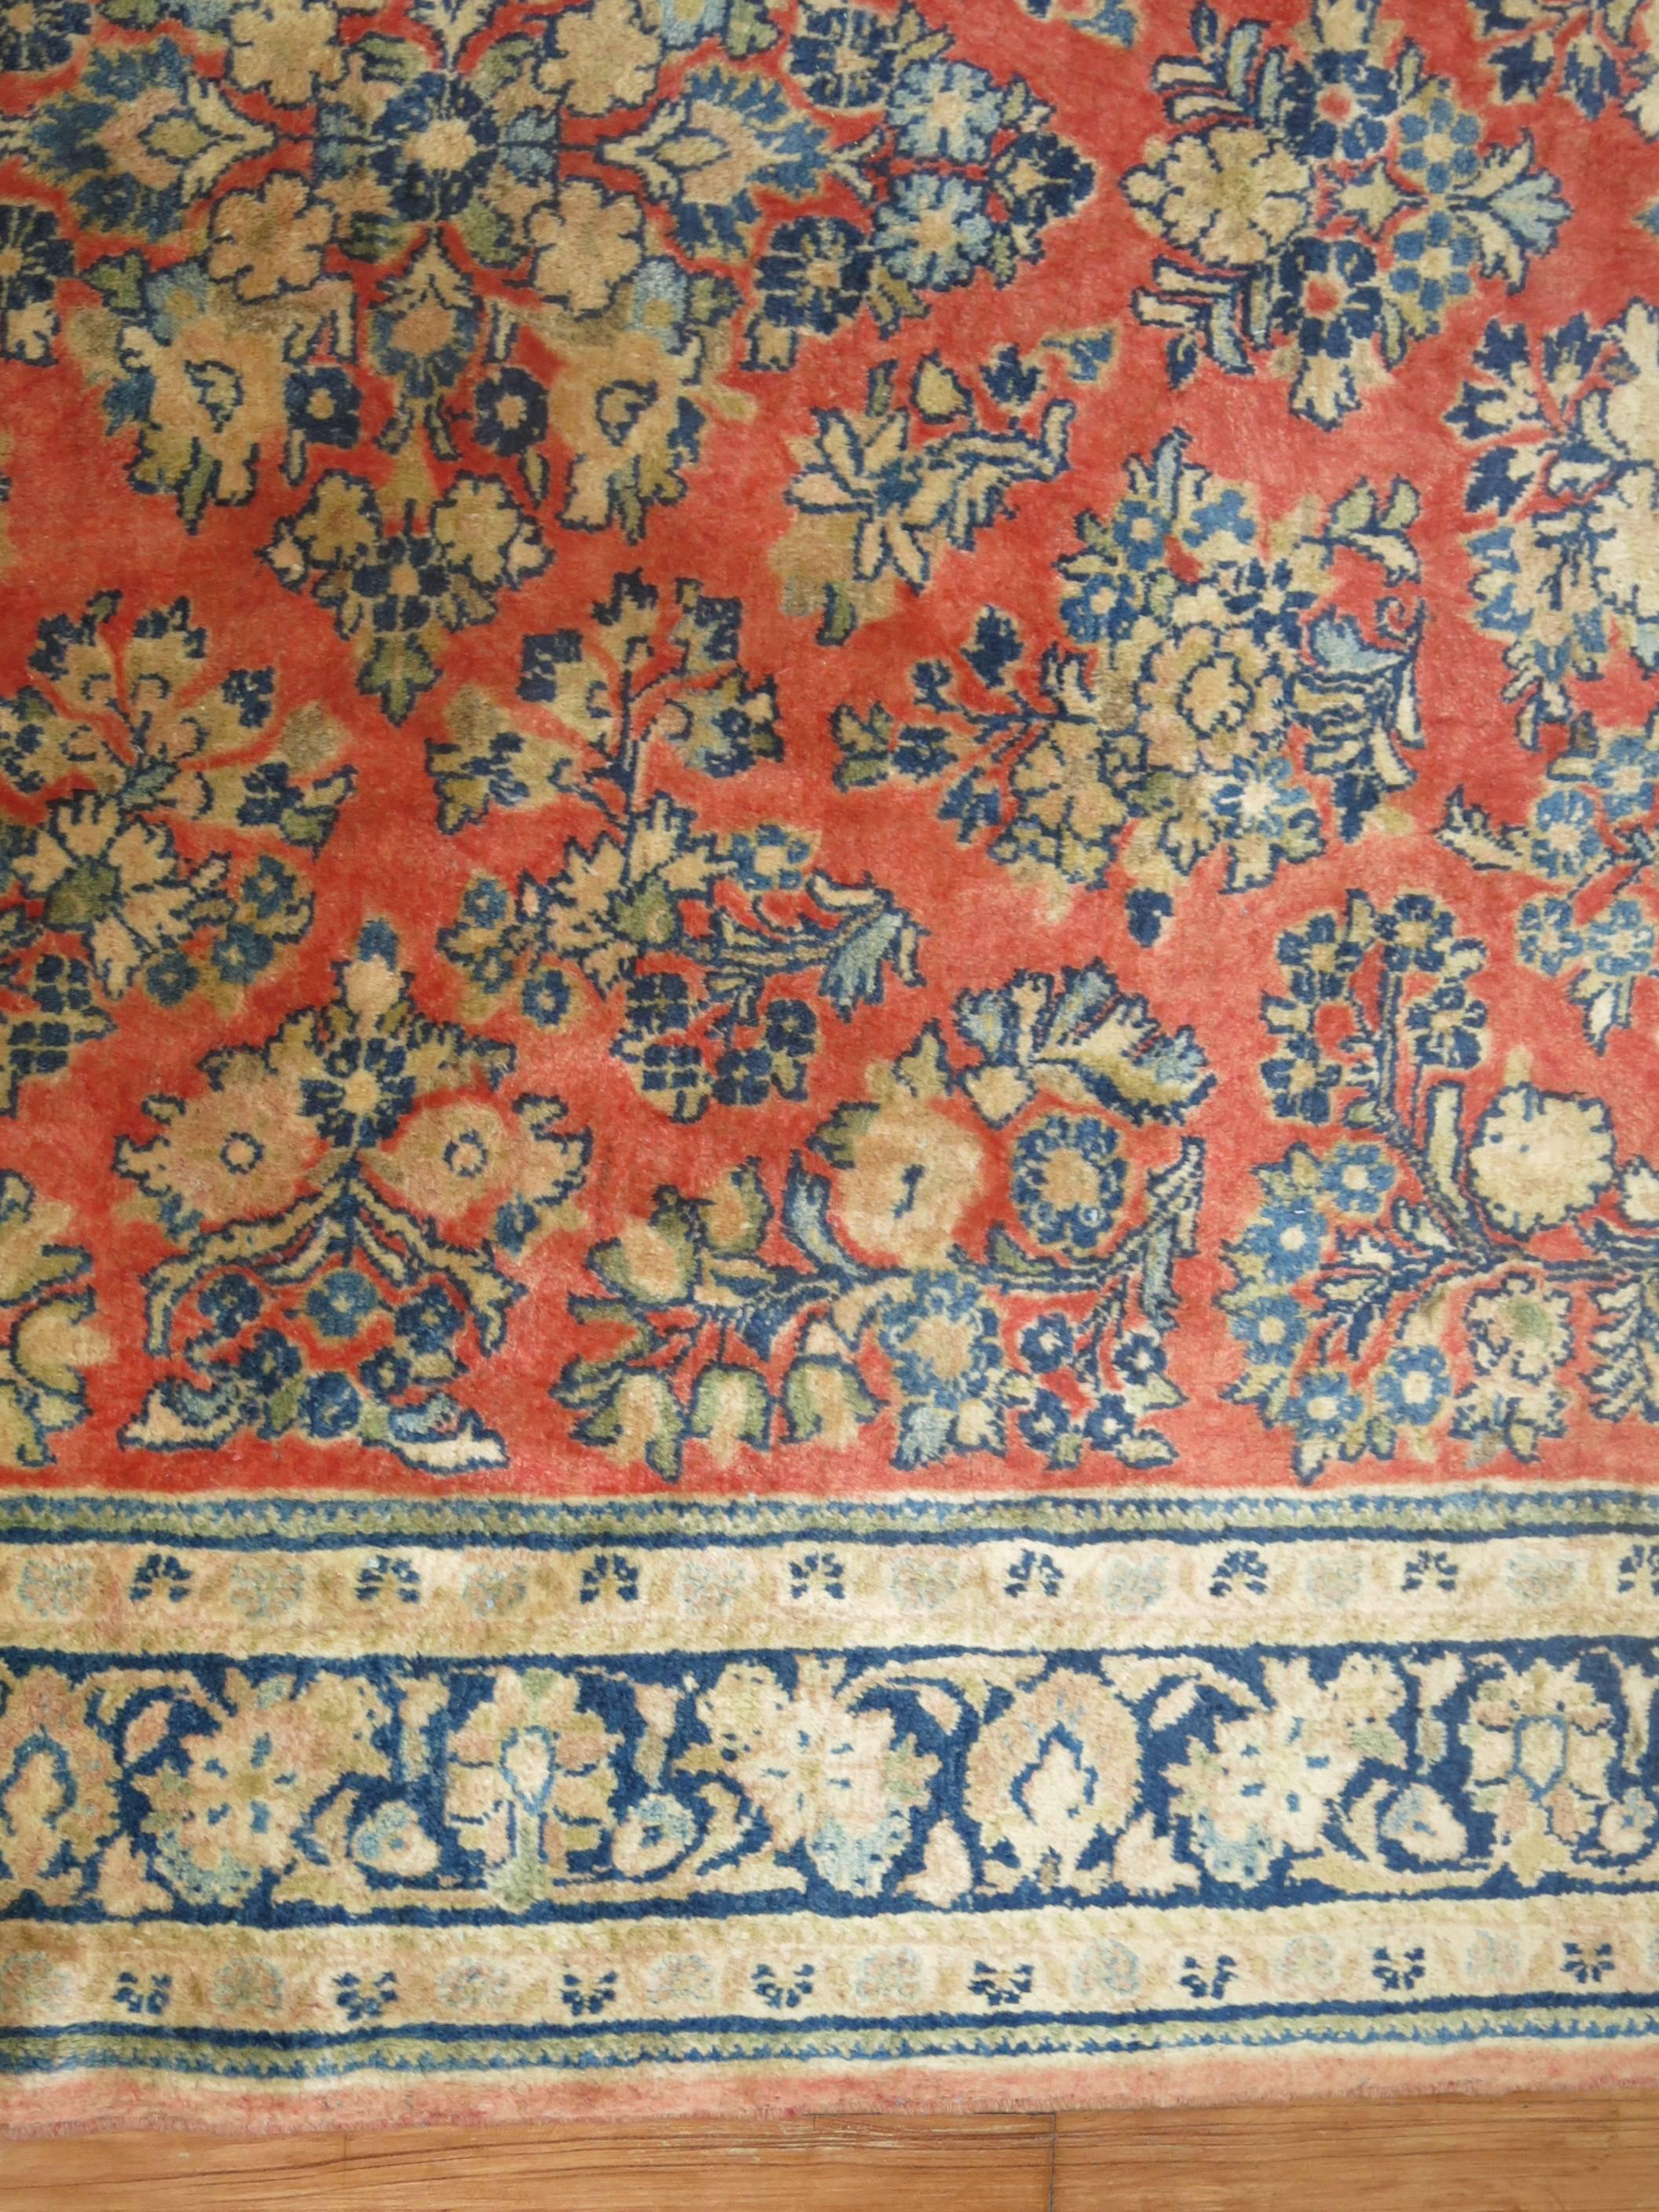 A rare size vintage Persian Sarouk carpet.

Measures: 5'4'' x 8'.